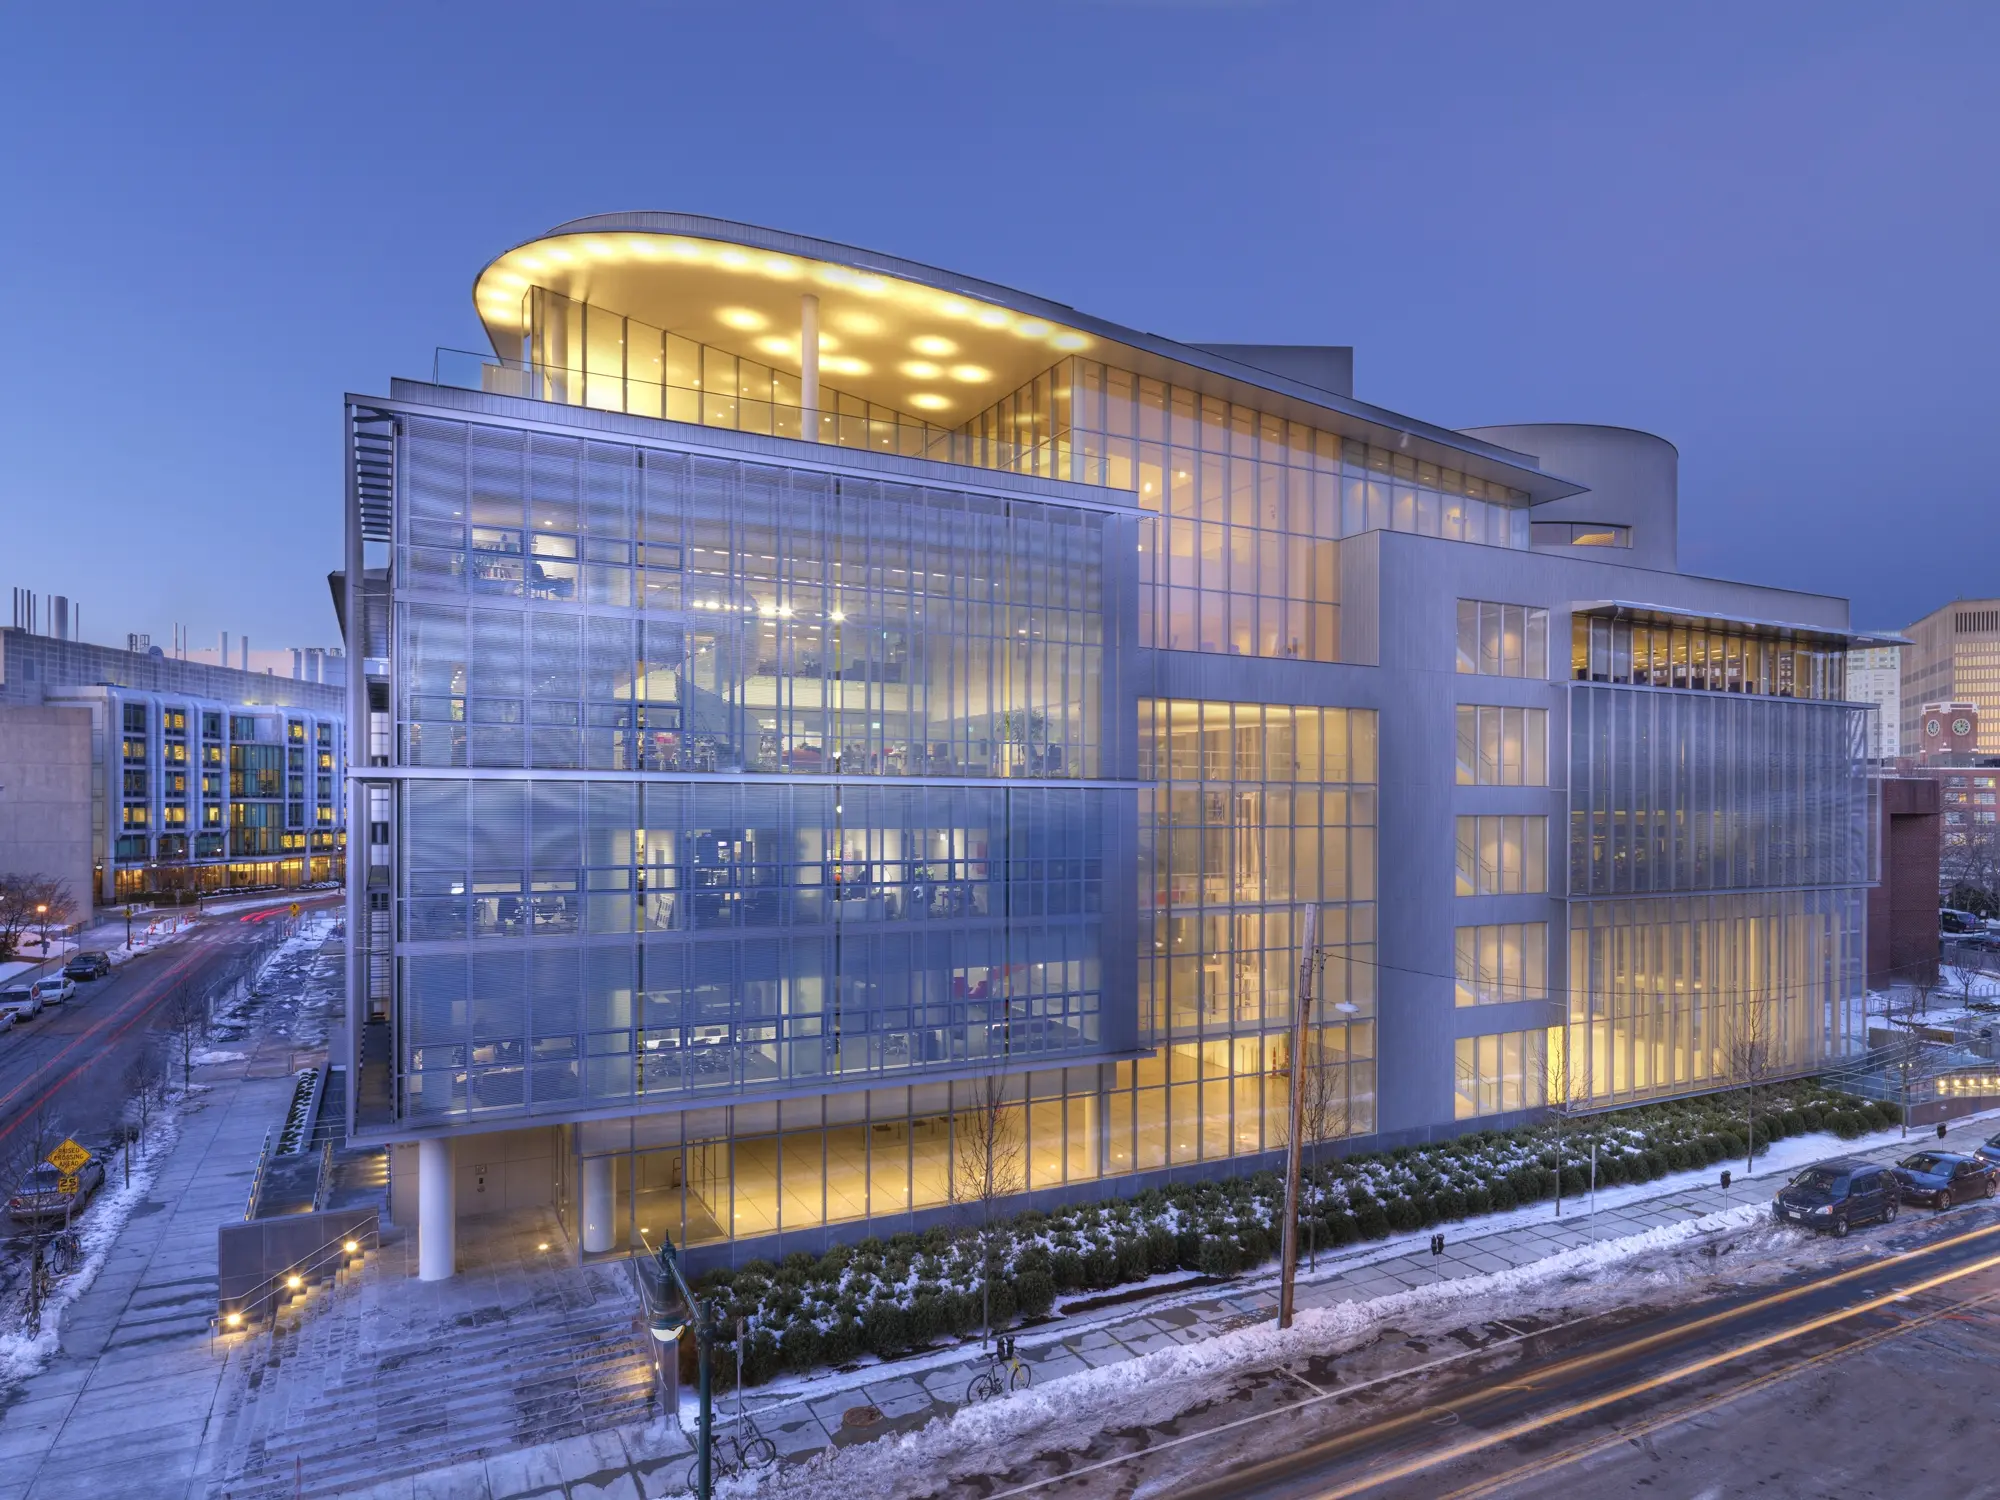 MIT Media Lab, Cambridge, MA, USA